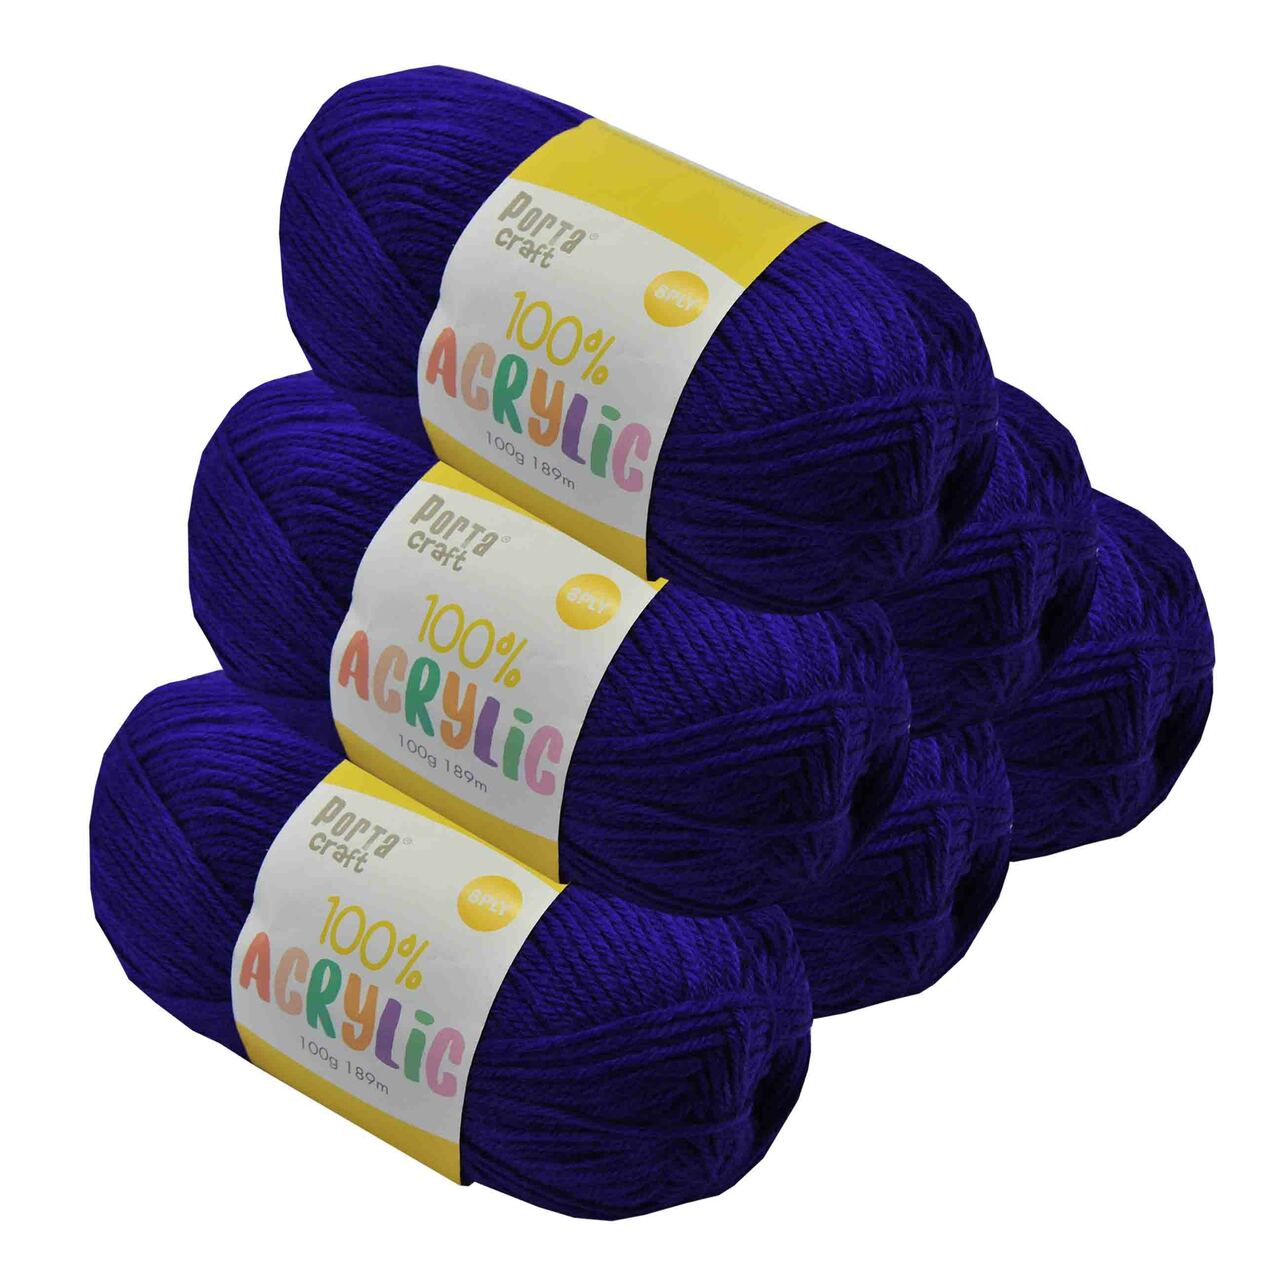 Acrylic Yarn 100g 189m 8ply - Purple Surprise